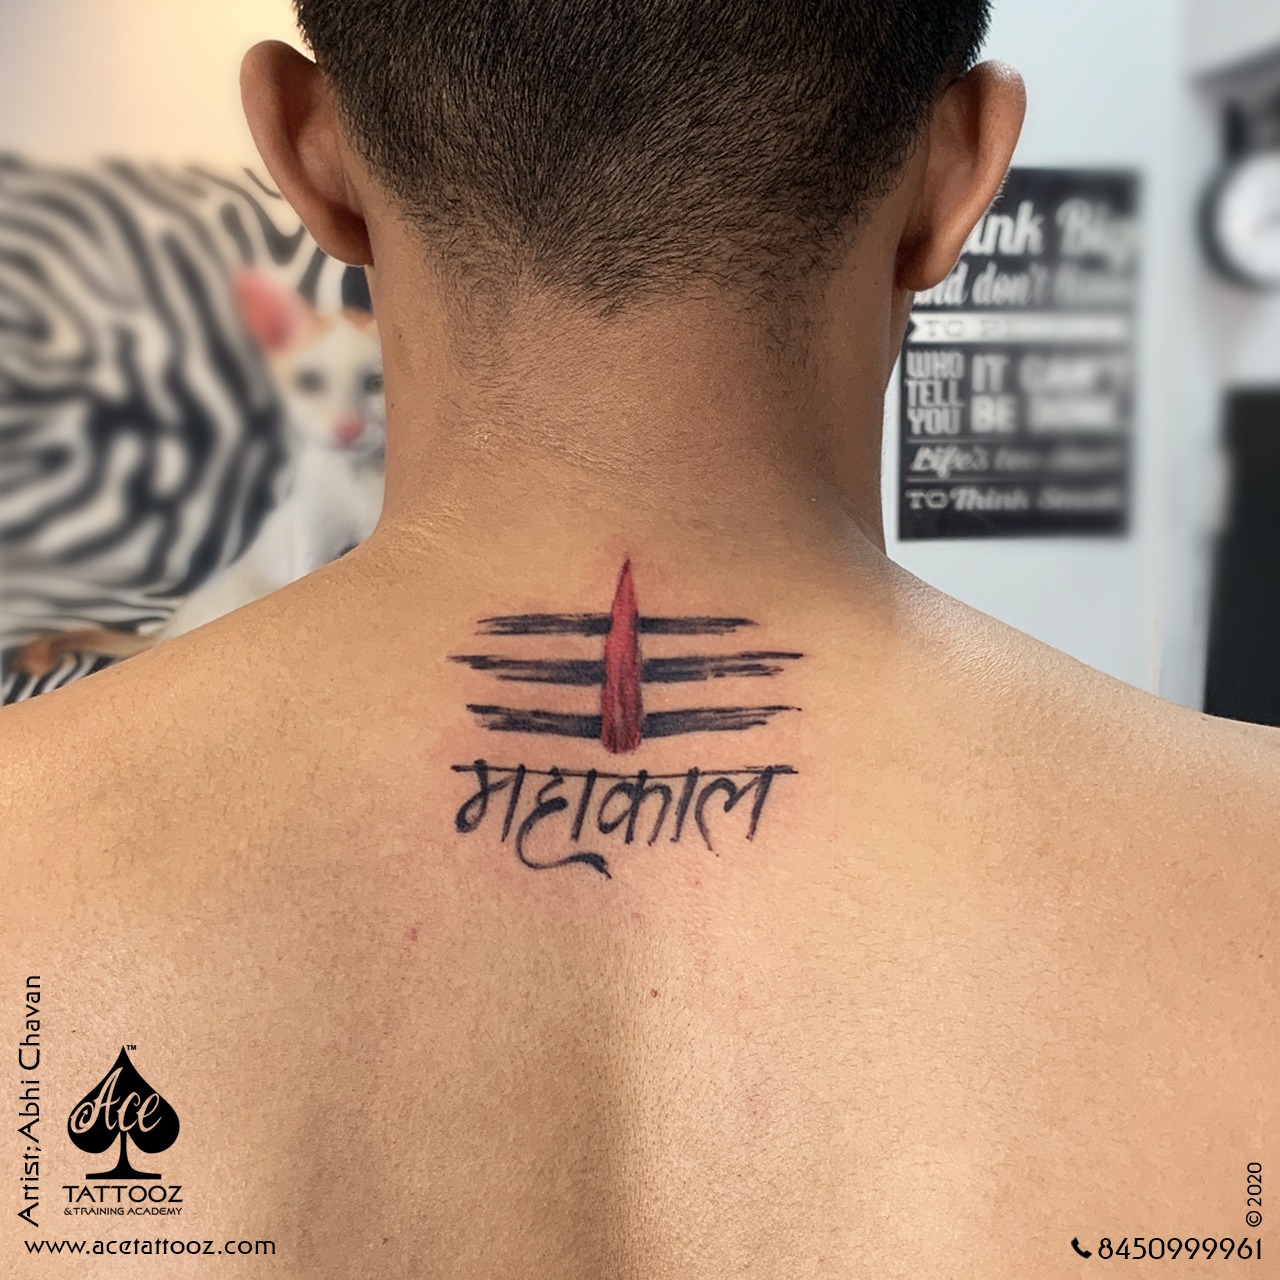 Mahakal Tattoo on Neck - Ace Tattooz